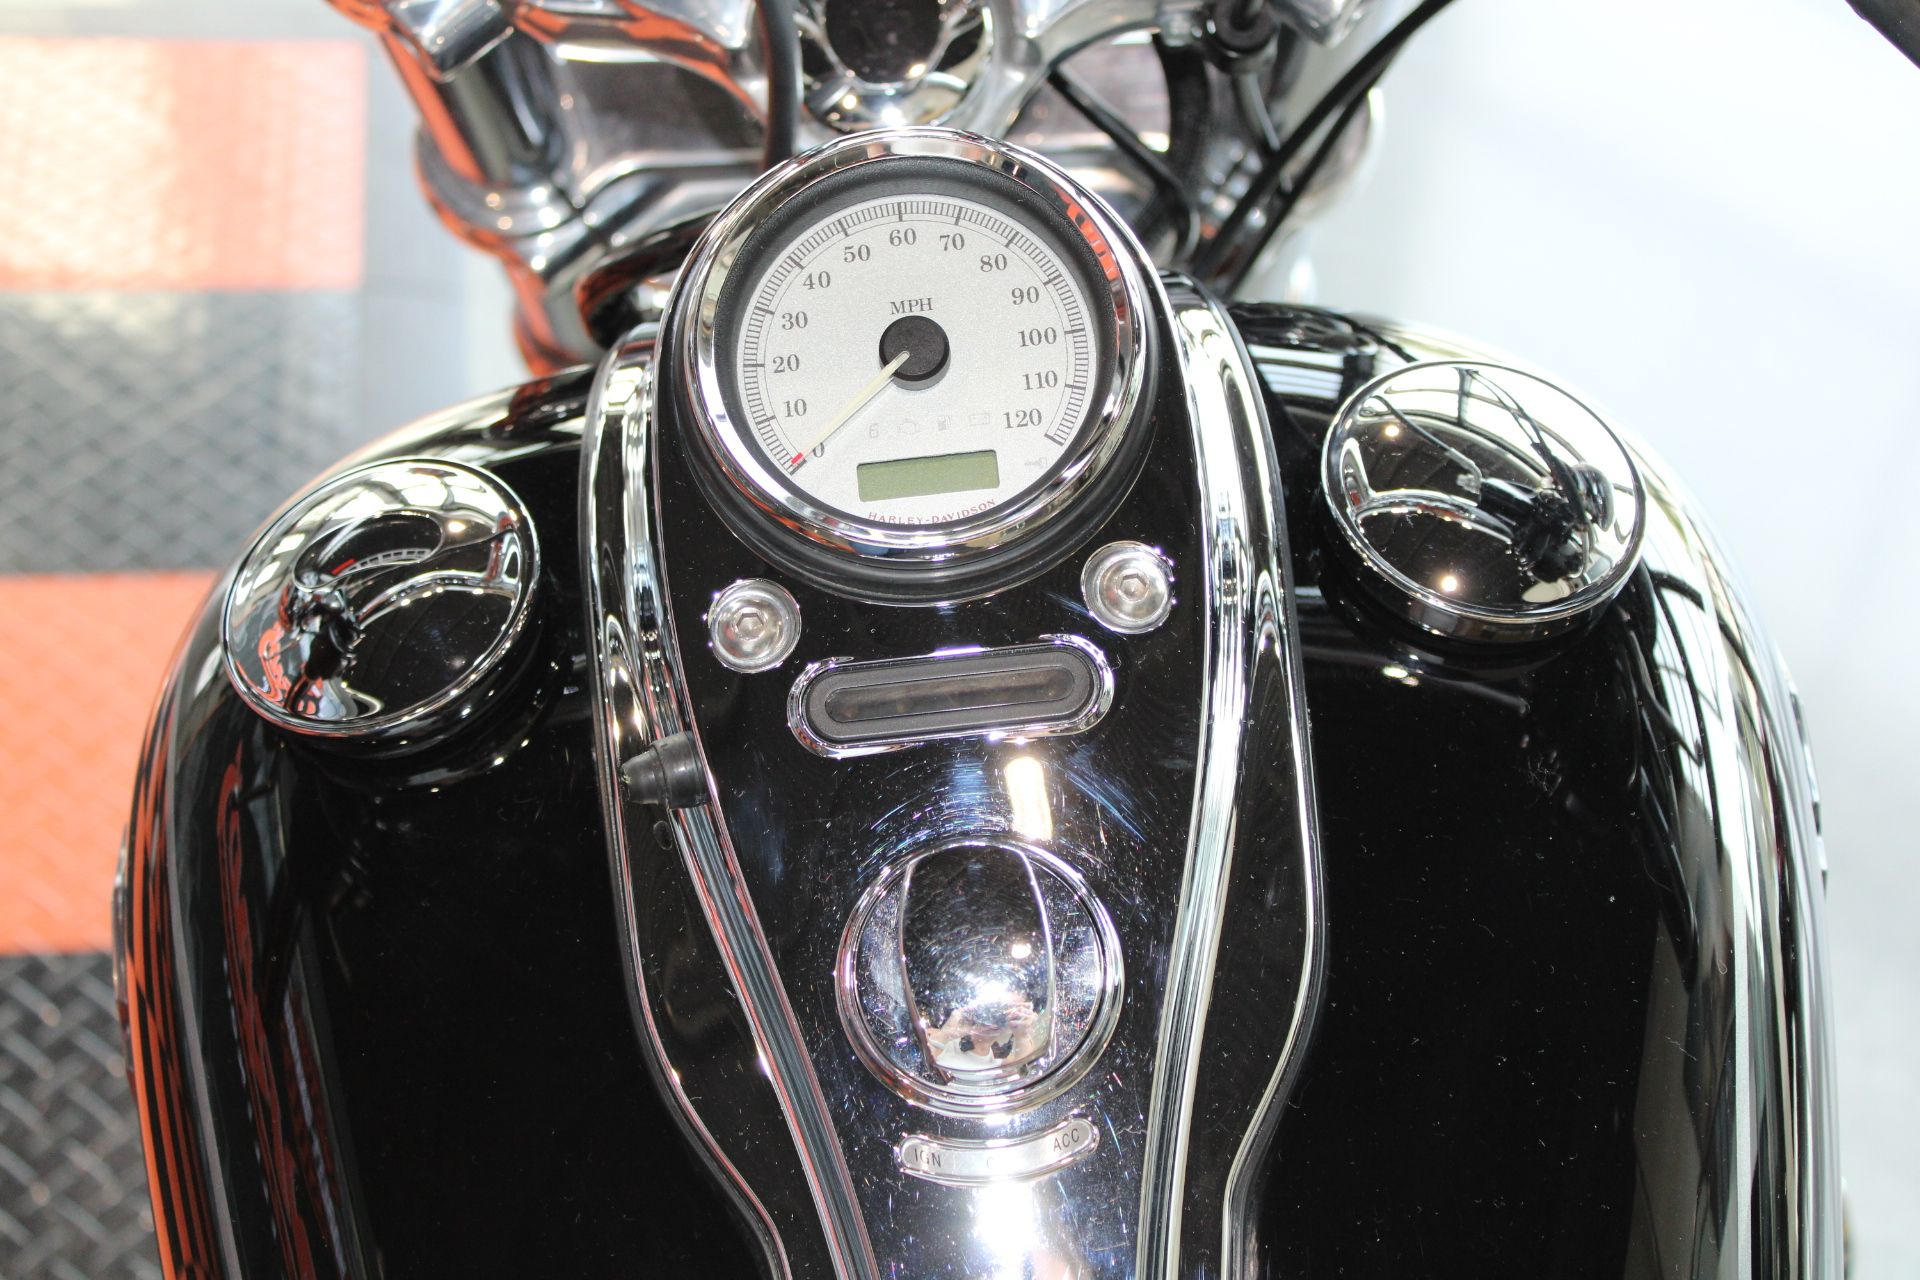 2011 Harley-Davidson Dyna® Wide Glide® in Shorewood, Illinois - Photo 9